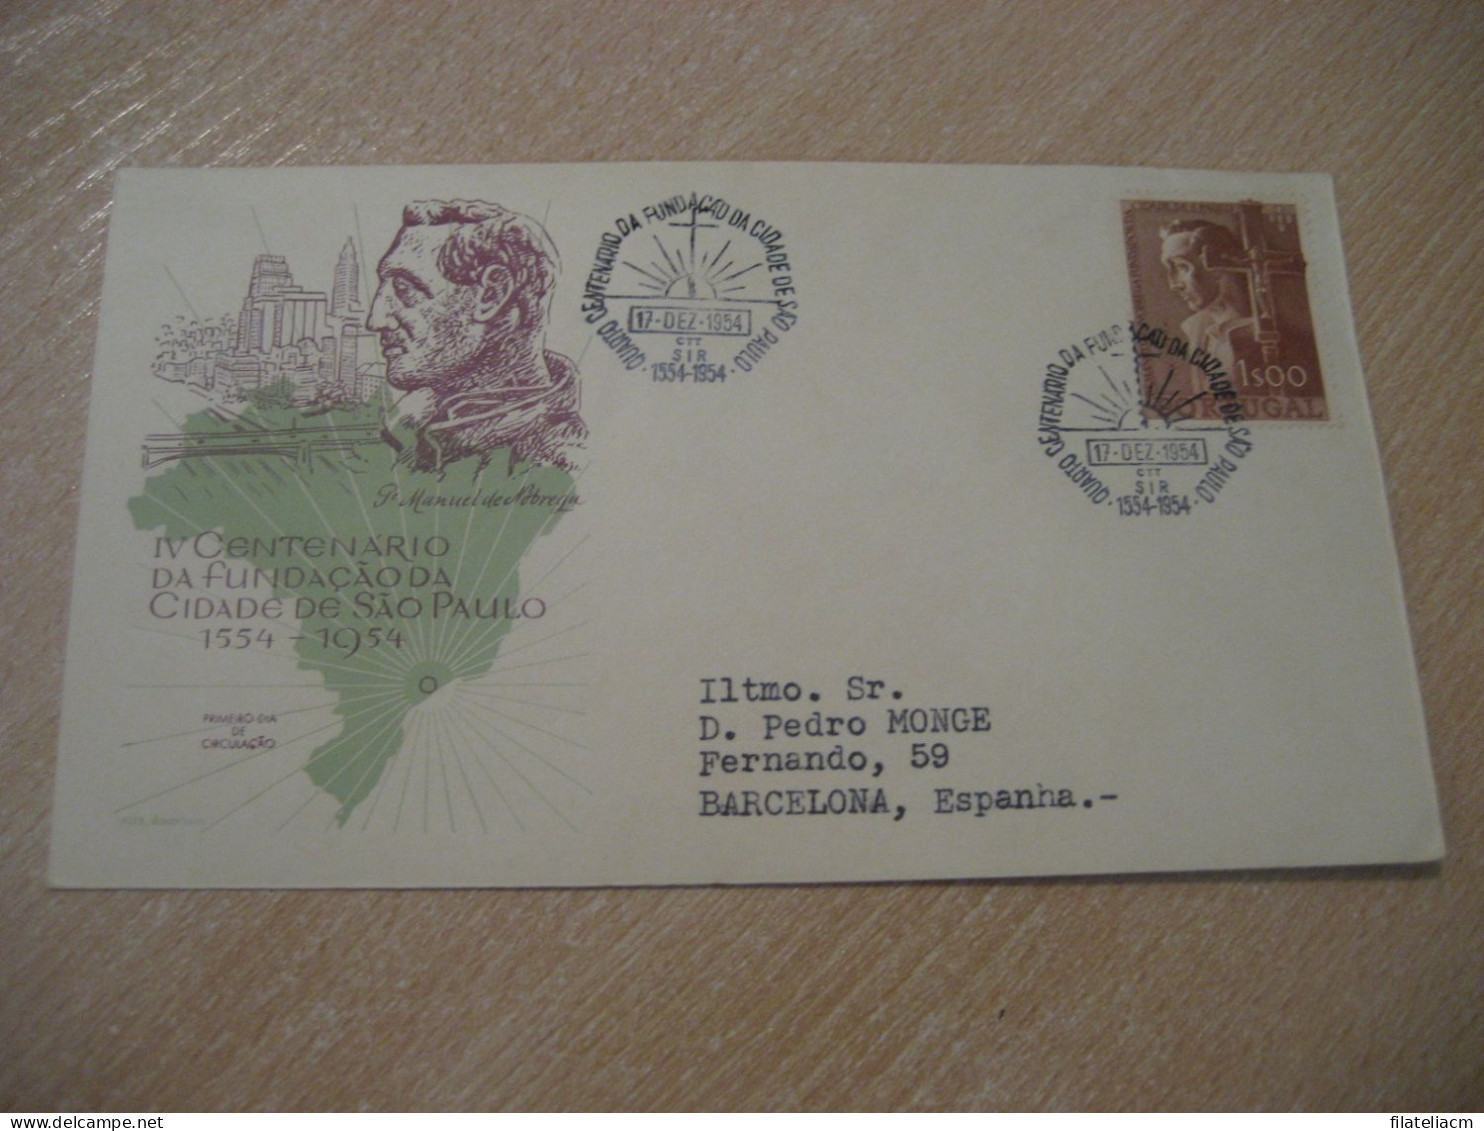 CTT SIR 1954 Manuel De Nobrega Founder SAO PAULO Brasil City FDC Cancel Cover PORTUGAL - Covers & Documents